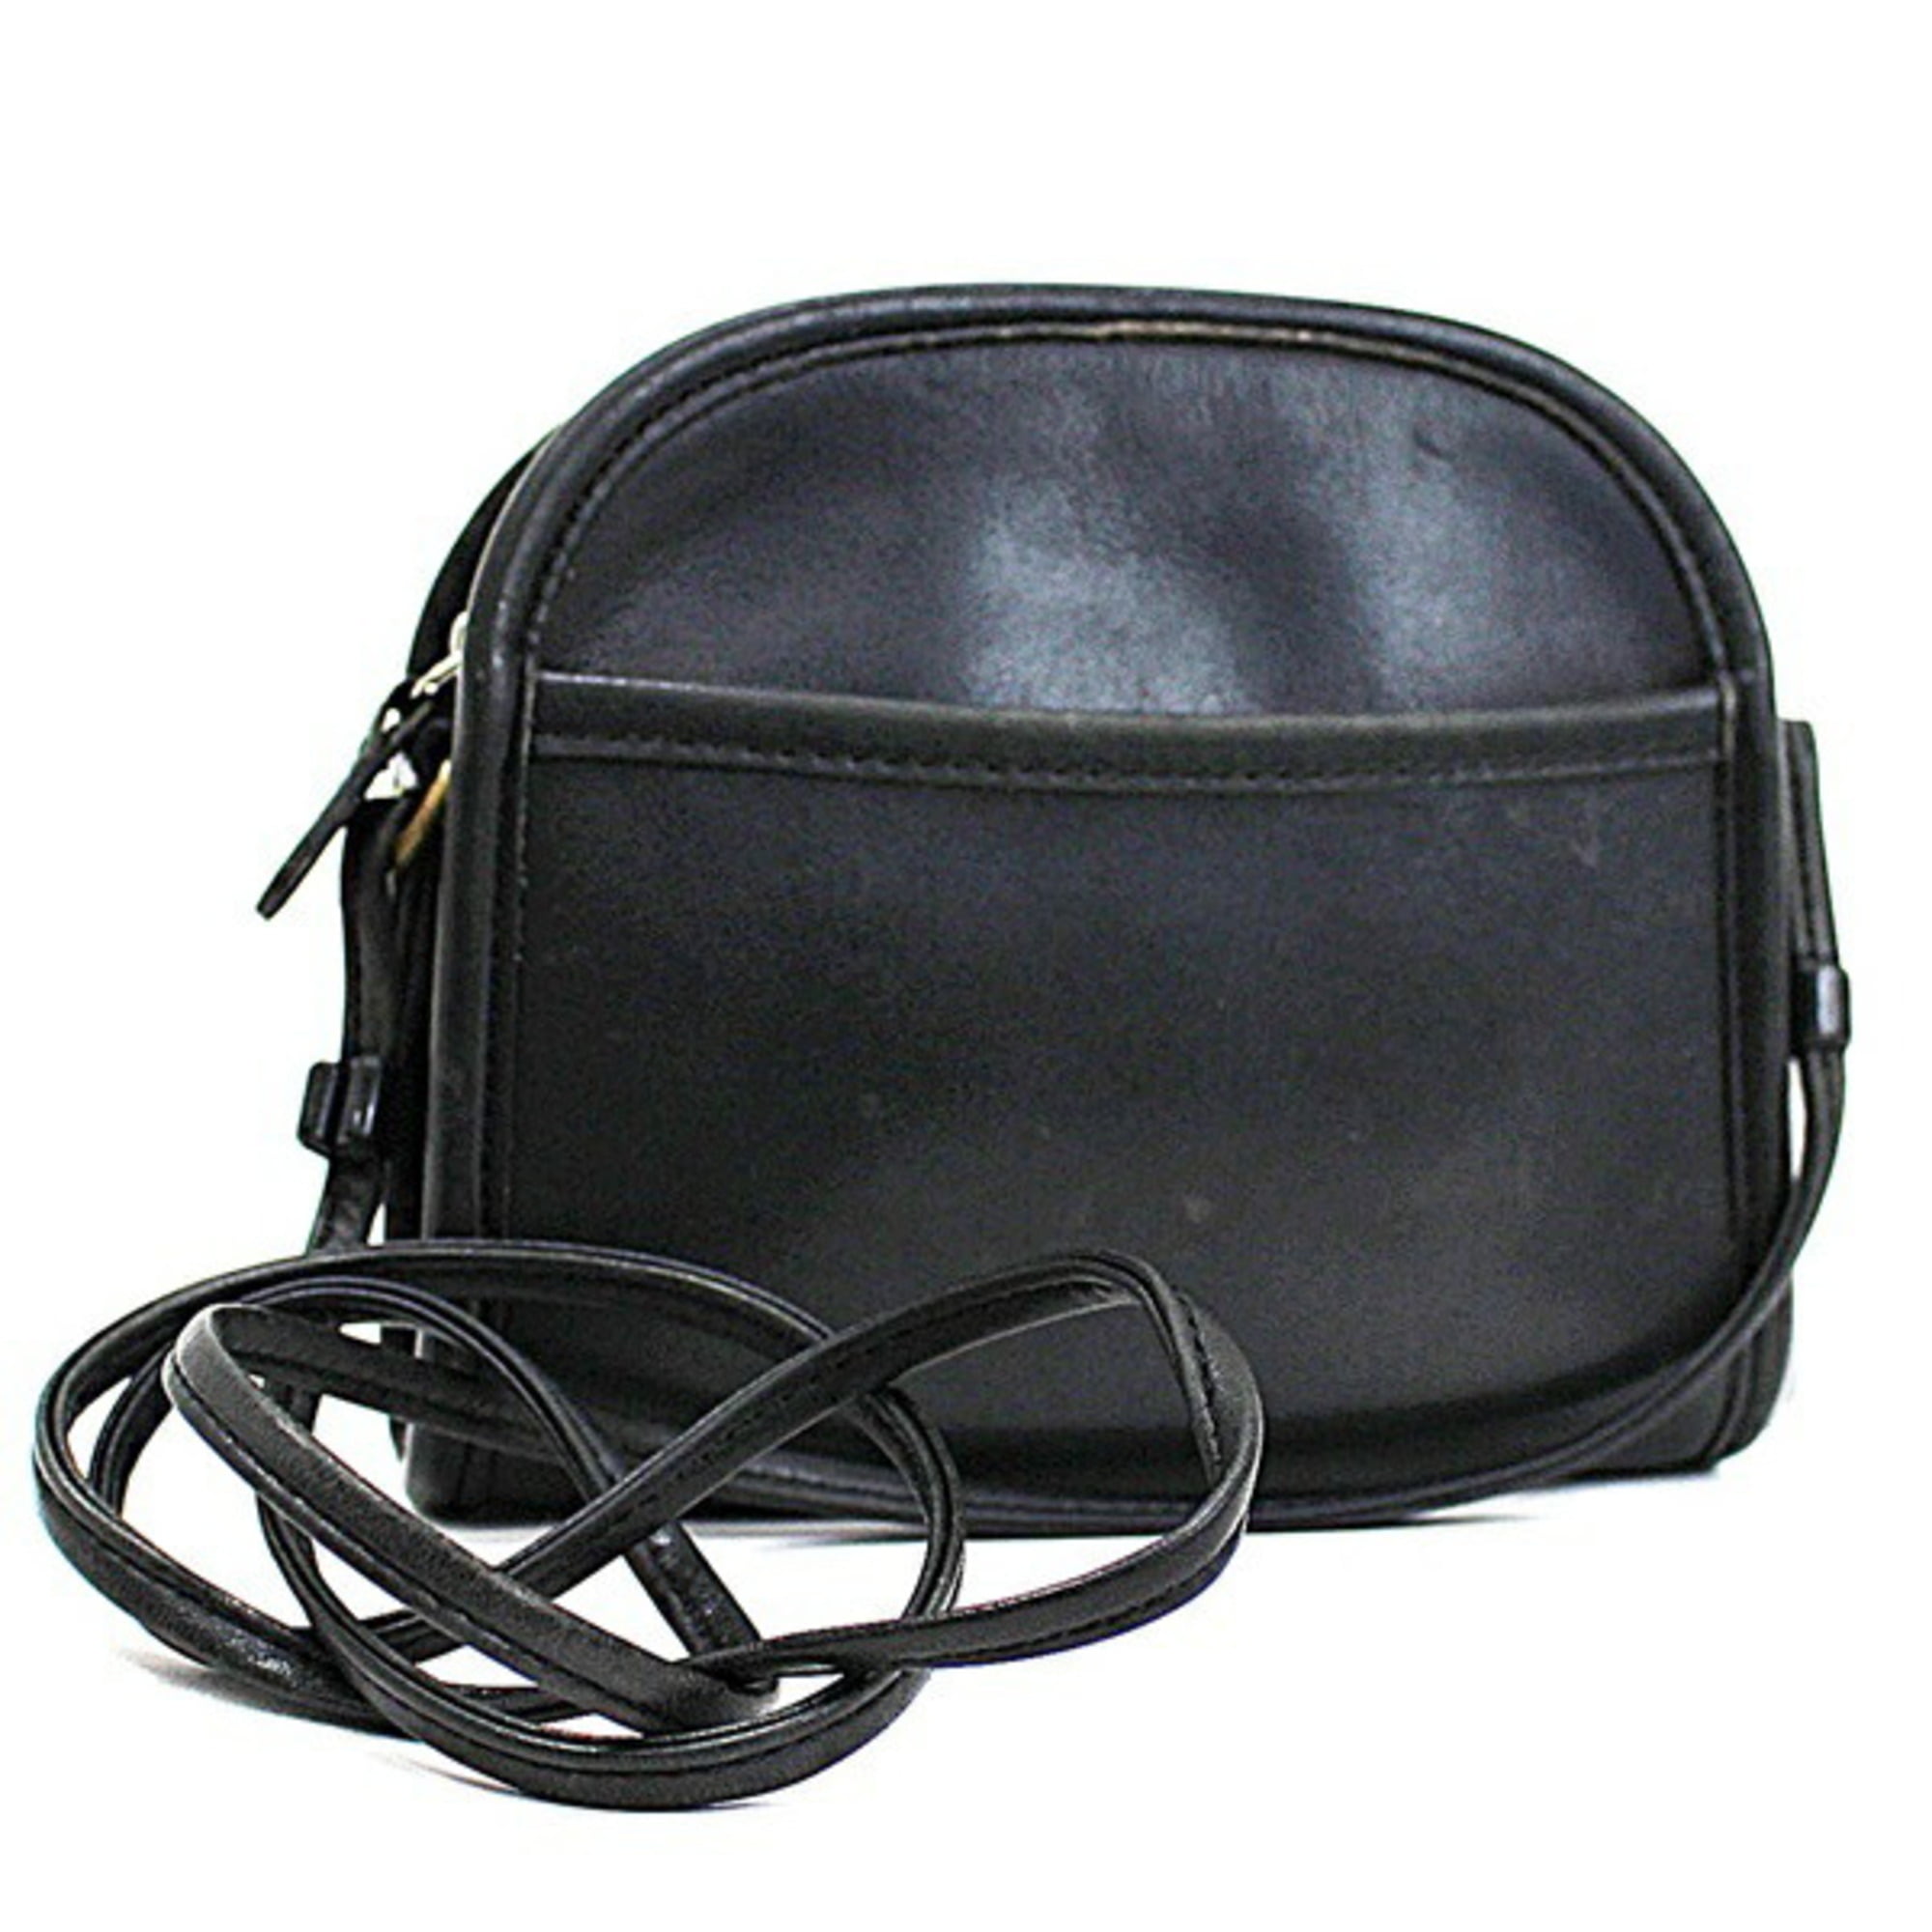 Authenticated Used Coach leather mini shoulder bag black 9017 COACH ladies  pochette half moon type